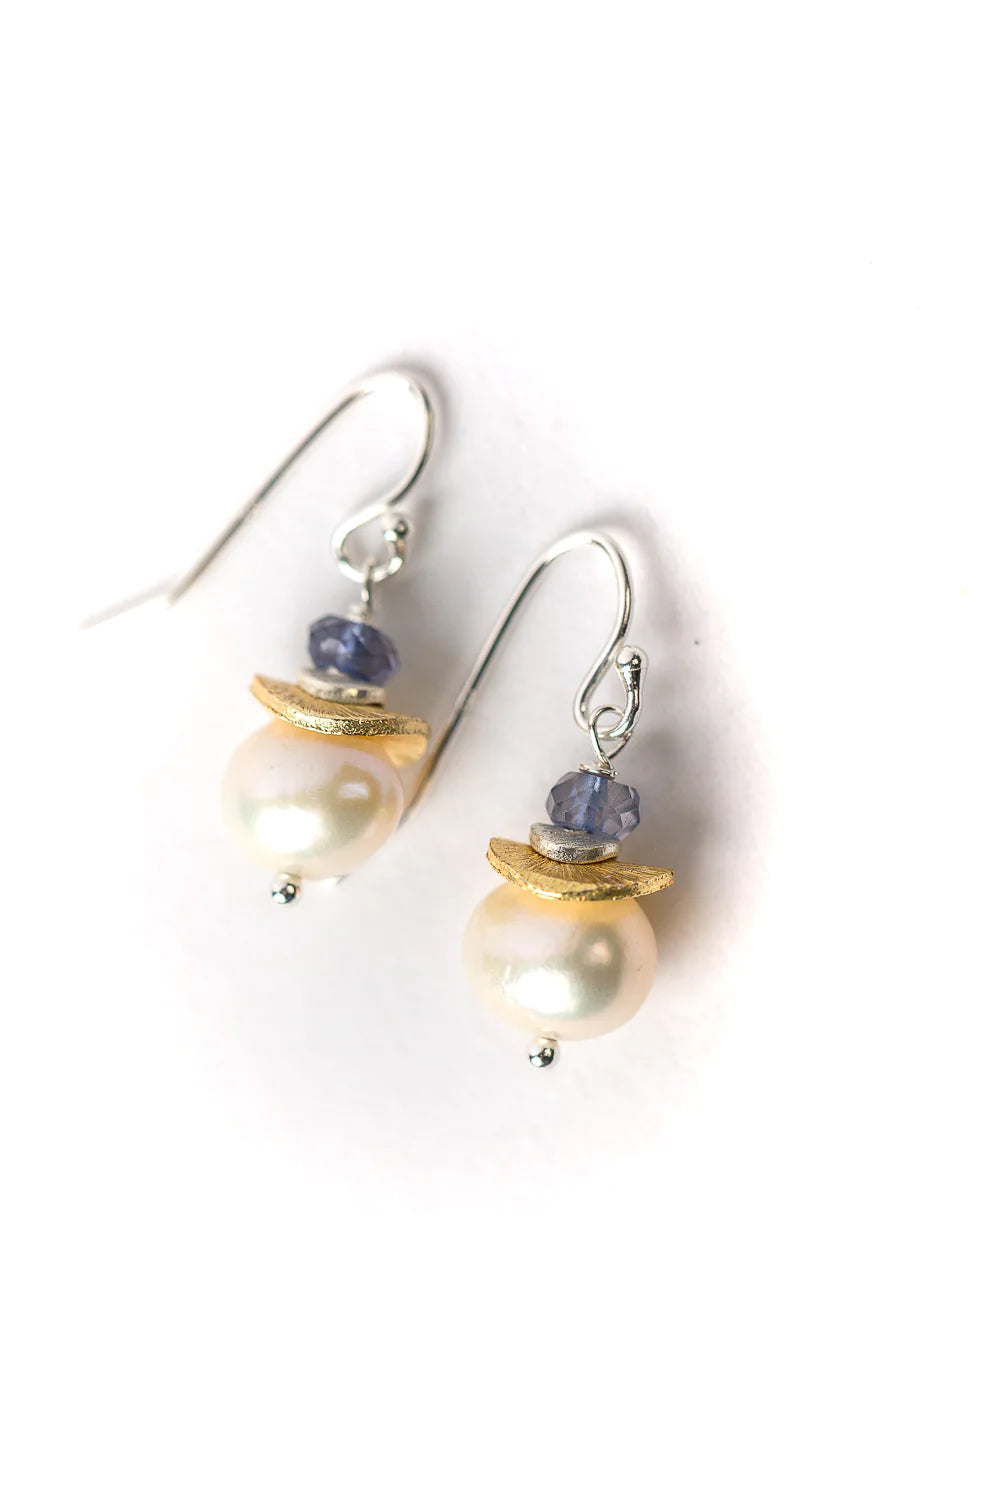 Vaughan - Seaside Collection - Earrings - Simple Pearl/Iolite Dangle #Sea018E